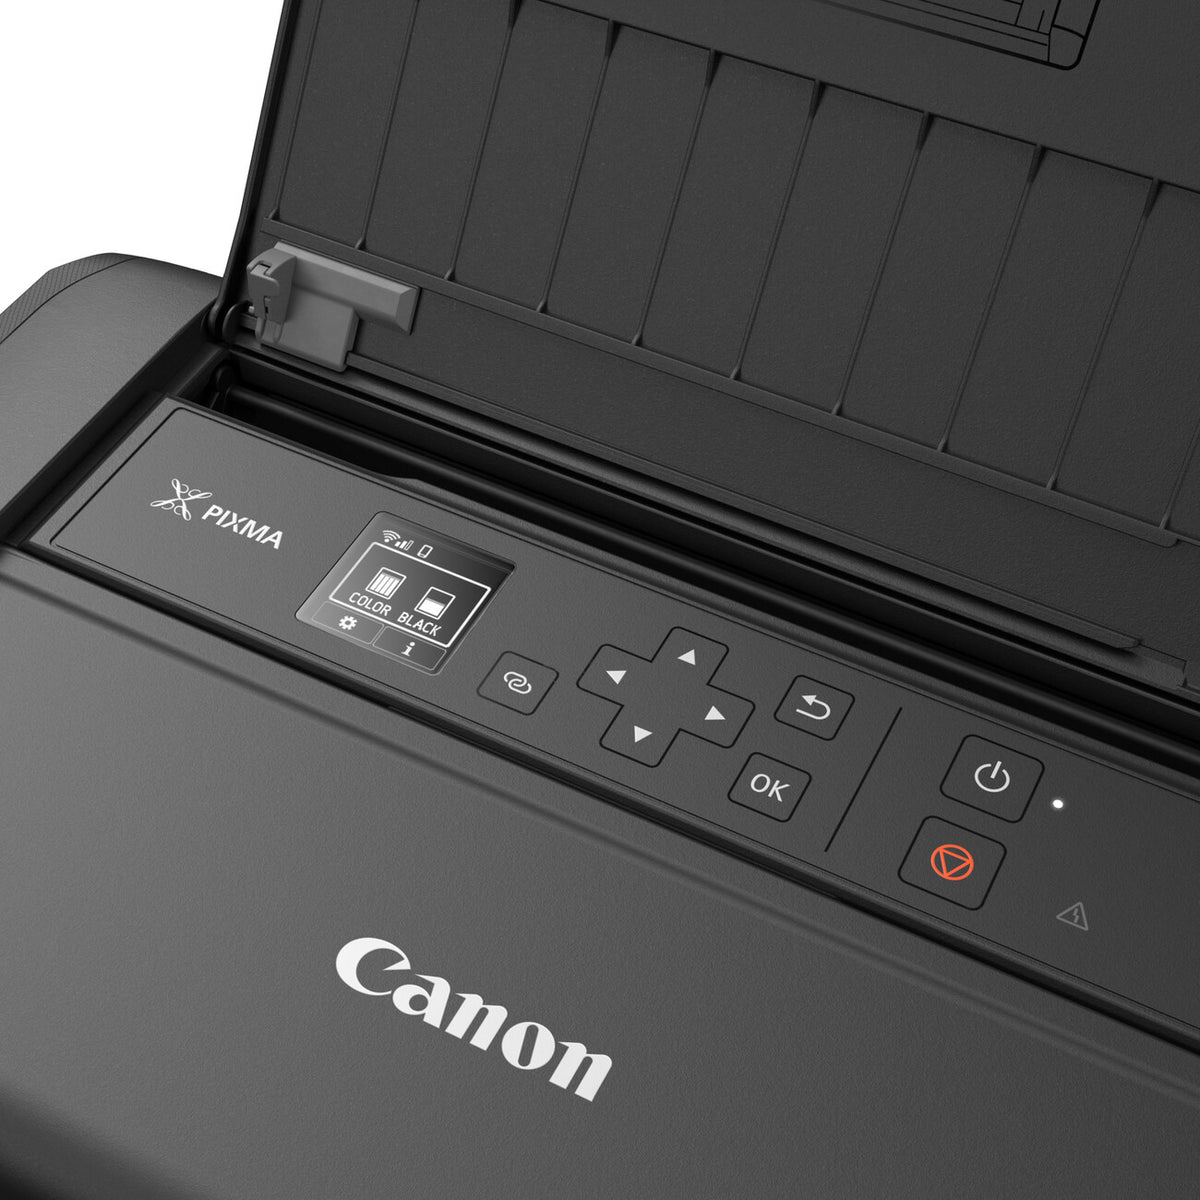 Canon PIXMA TR150 - Wi-Fi Inkjet Photo Printer